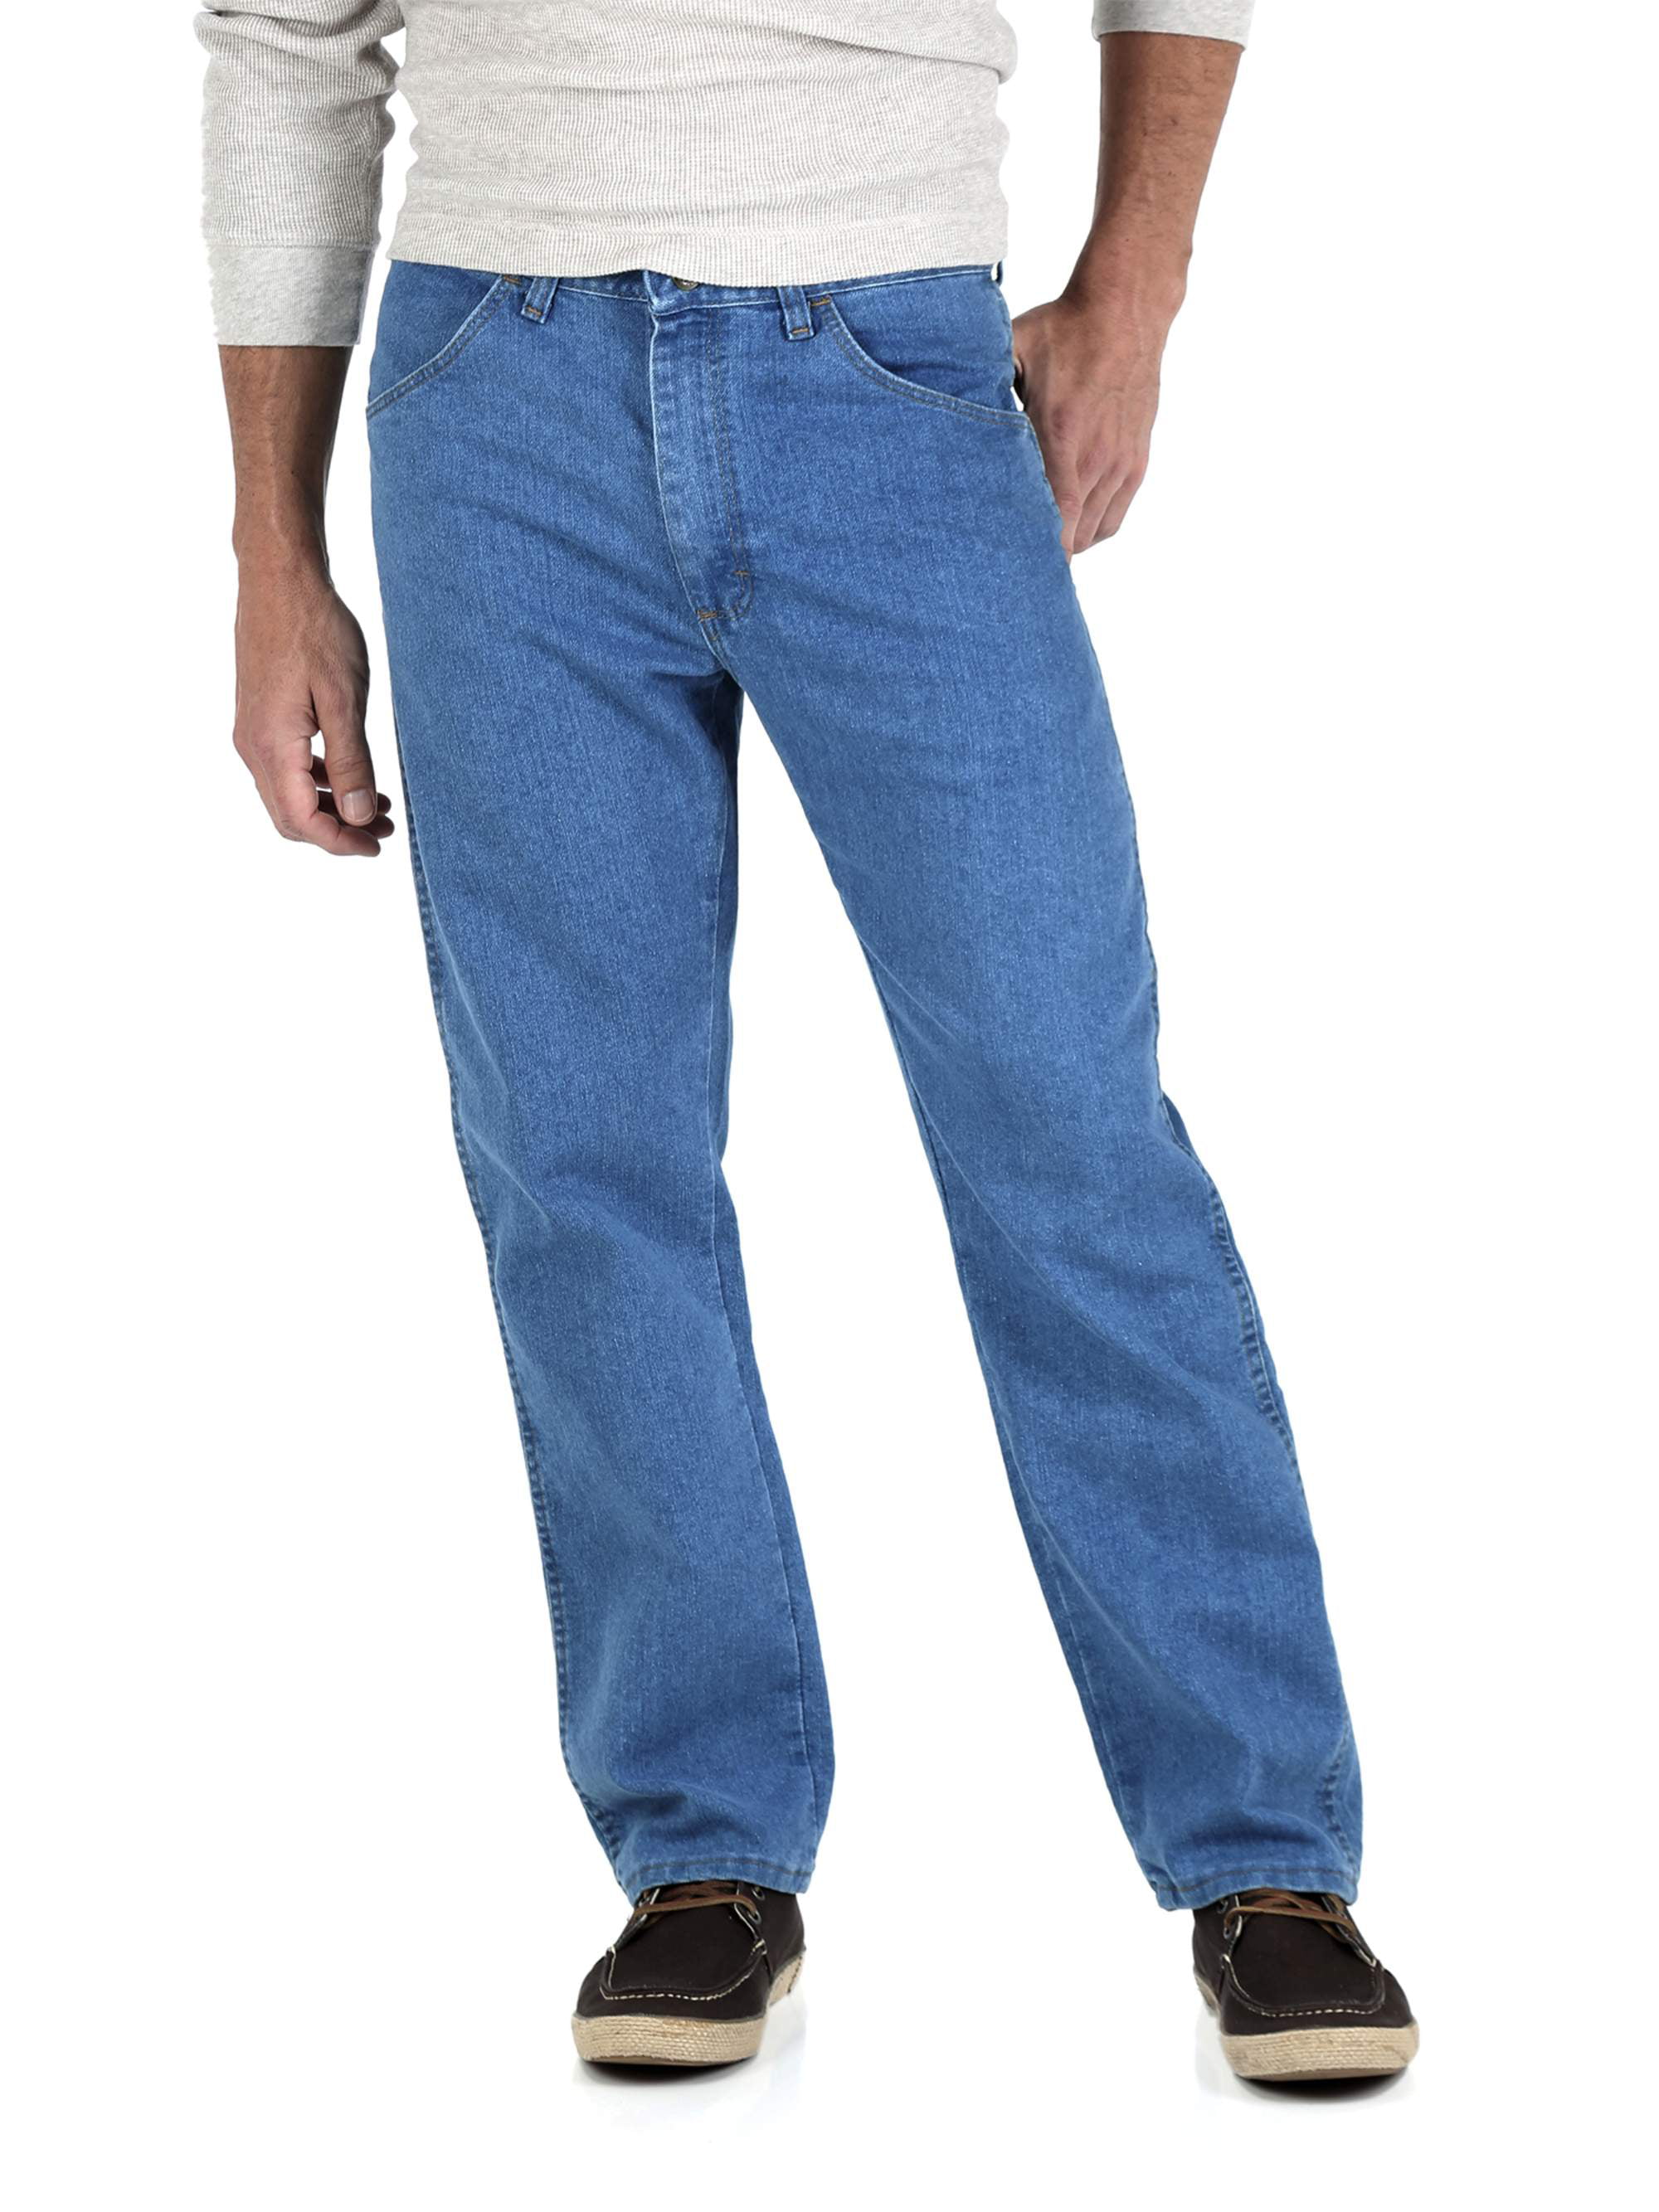 Wrangler - Wrangler Men's Regular Fit Stretch Jeans - Walmart.com